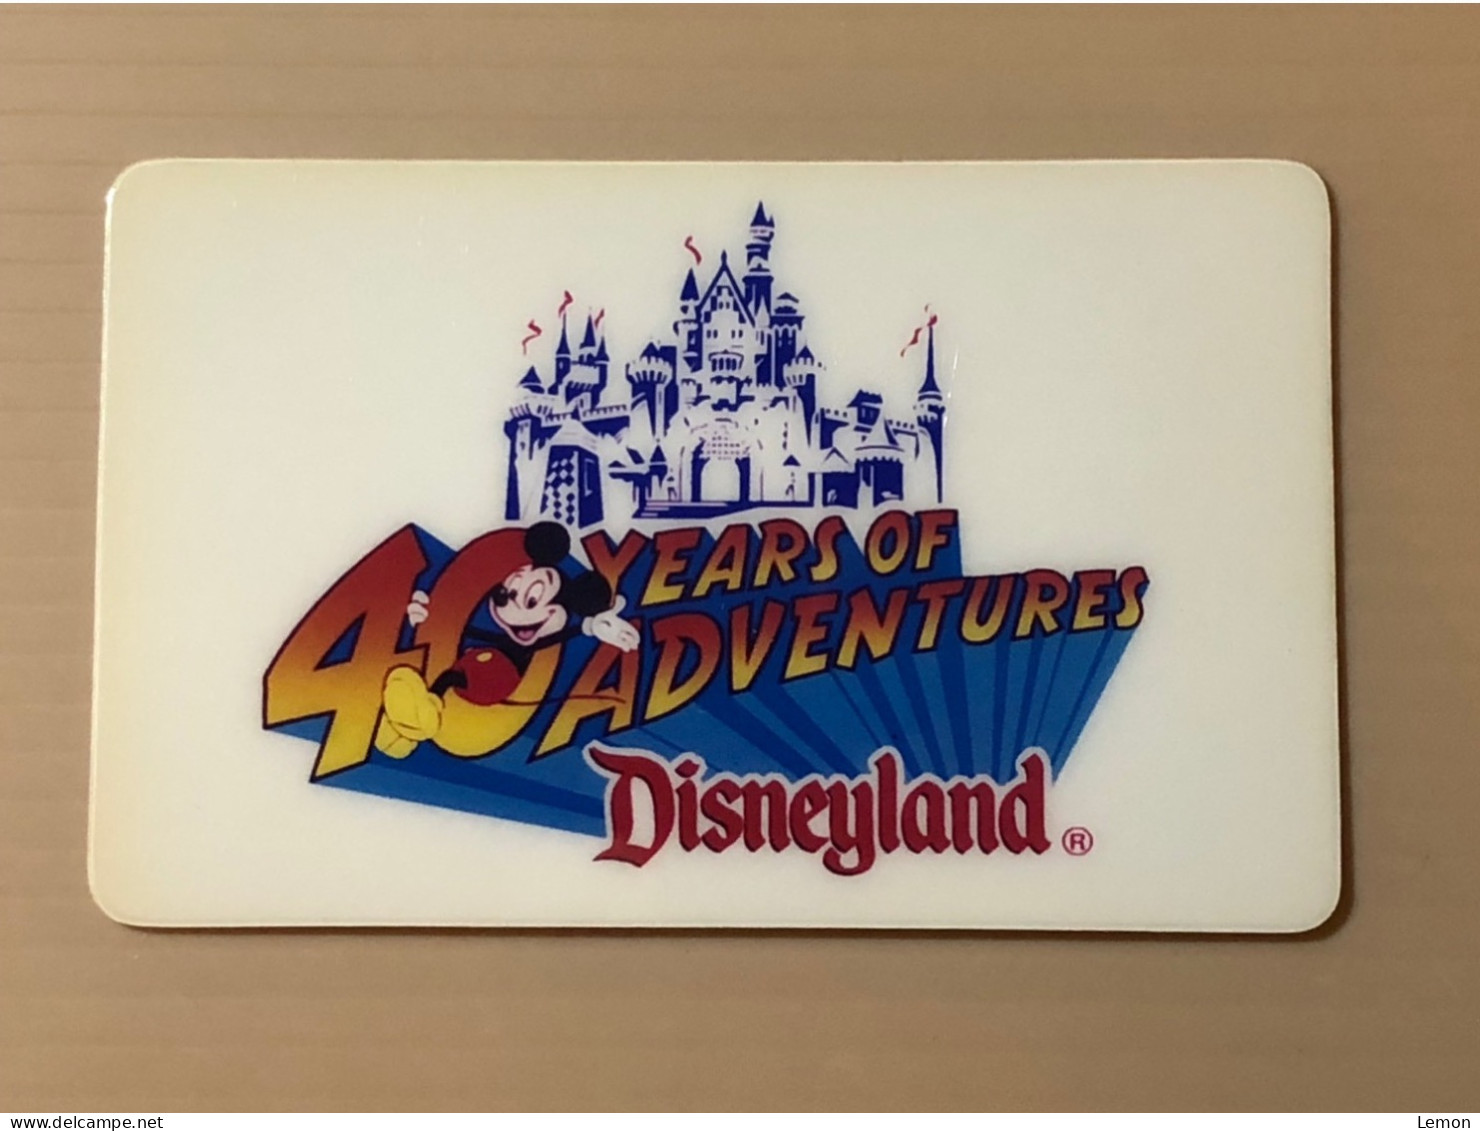 Mint USA UNITED STATES America Prepaid Telecard Phonecard, Disneyland 40 Years Adventure SAMPLE CARD, Set Of 1 Mint Card - Sammlungen